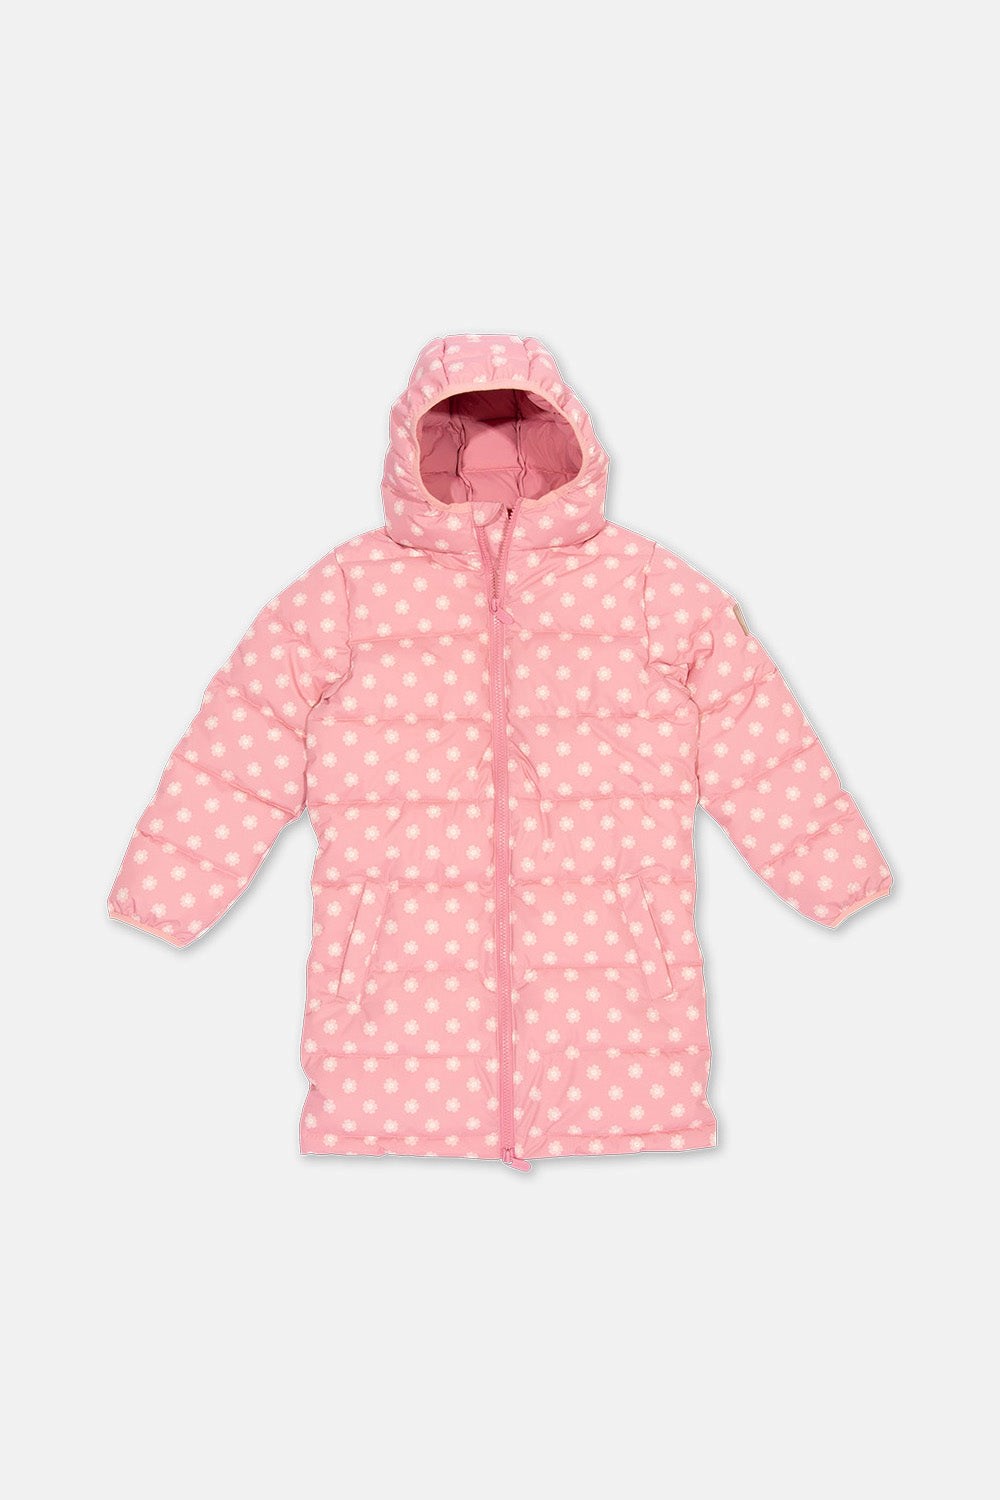 Fab Flower Baby/Kids Snuggle Coat -